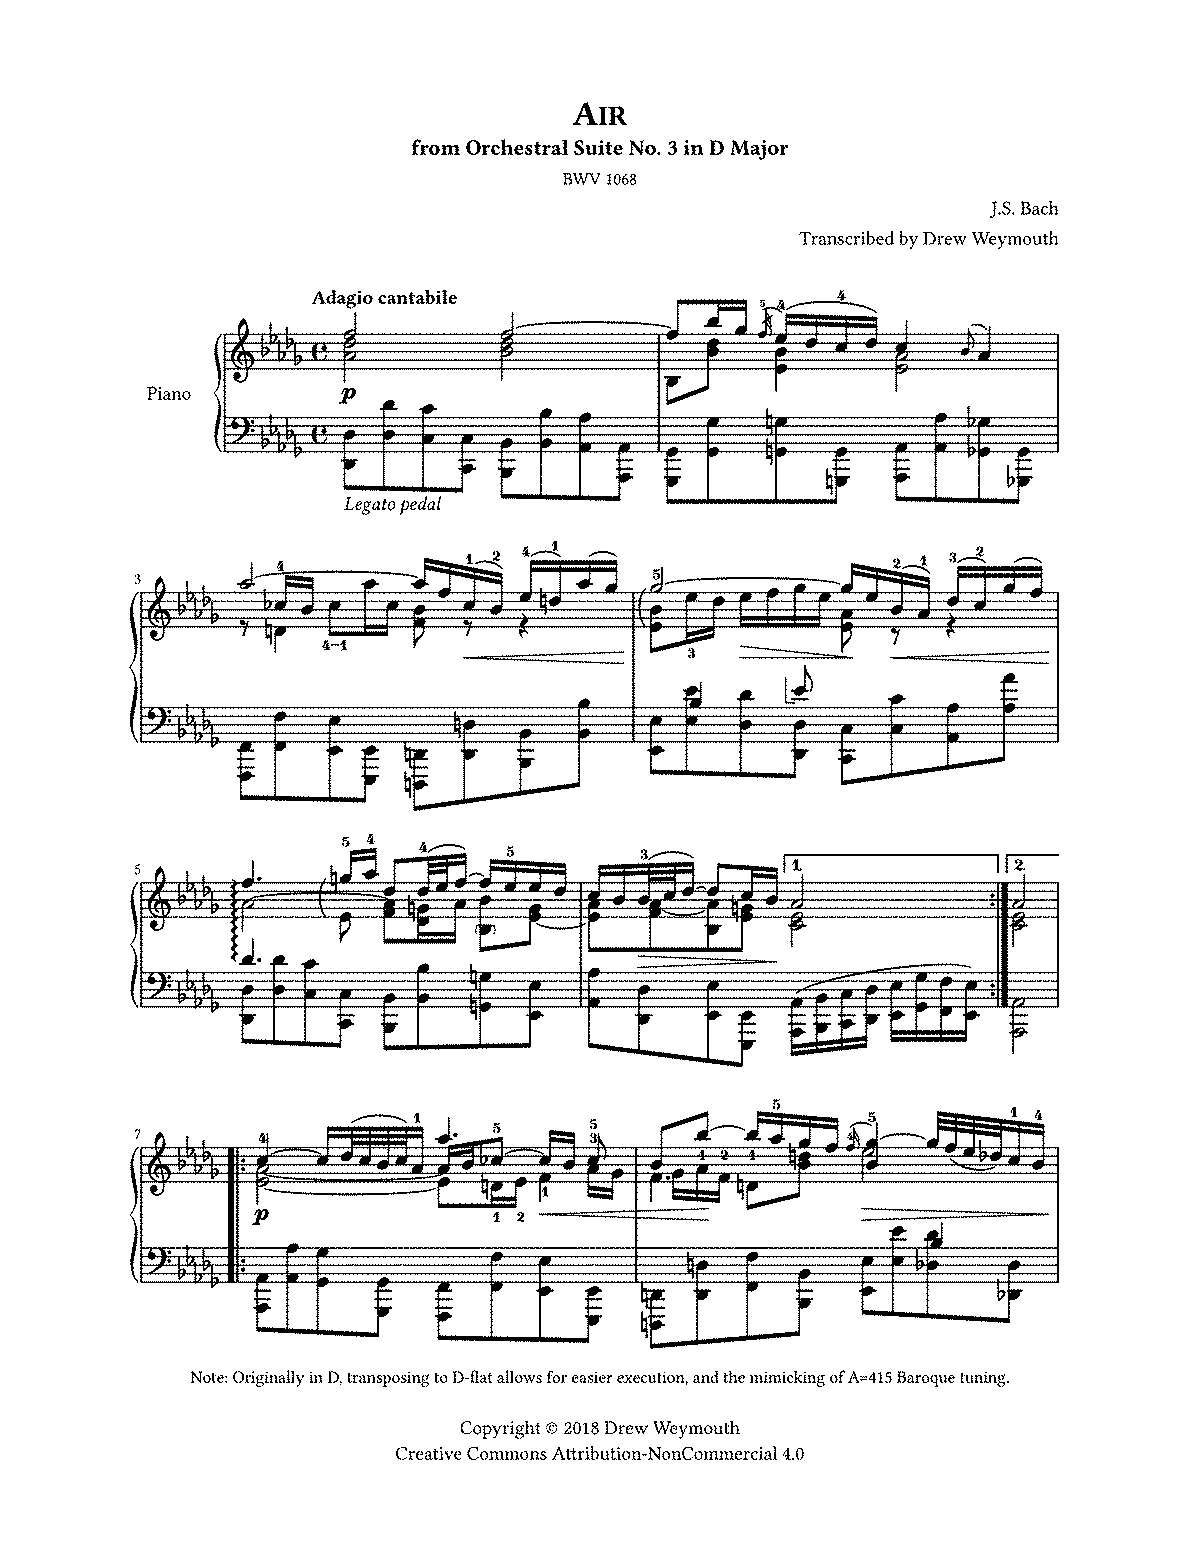 Бах 3 ре мажор. Бах Ария BWV 1068 Ноты. BWV 1068 Air. Бах сюита мажор. Suite no. 3 in d Major, BWV 1068 Ноты.